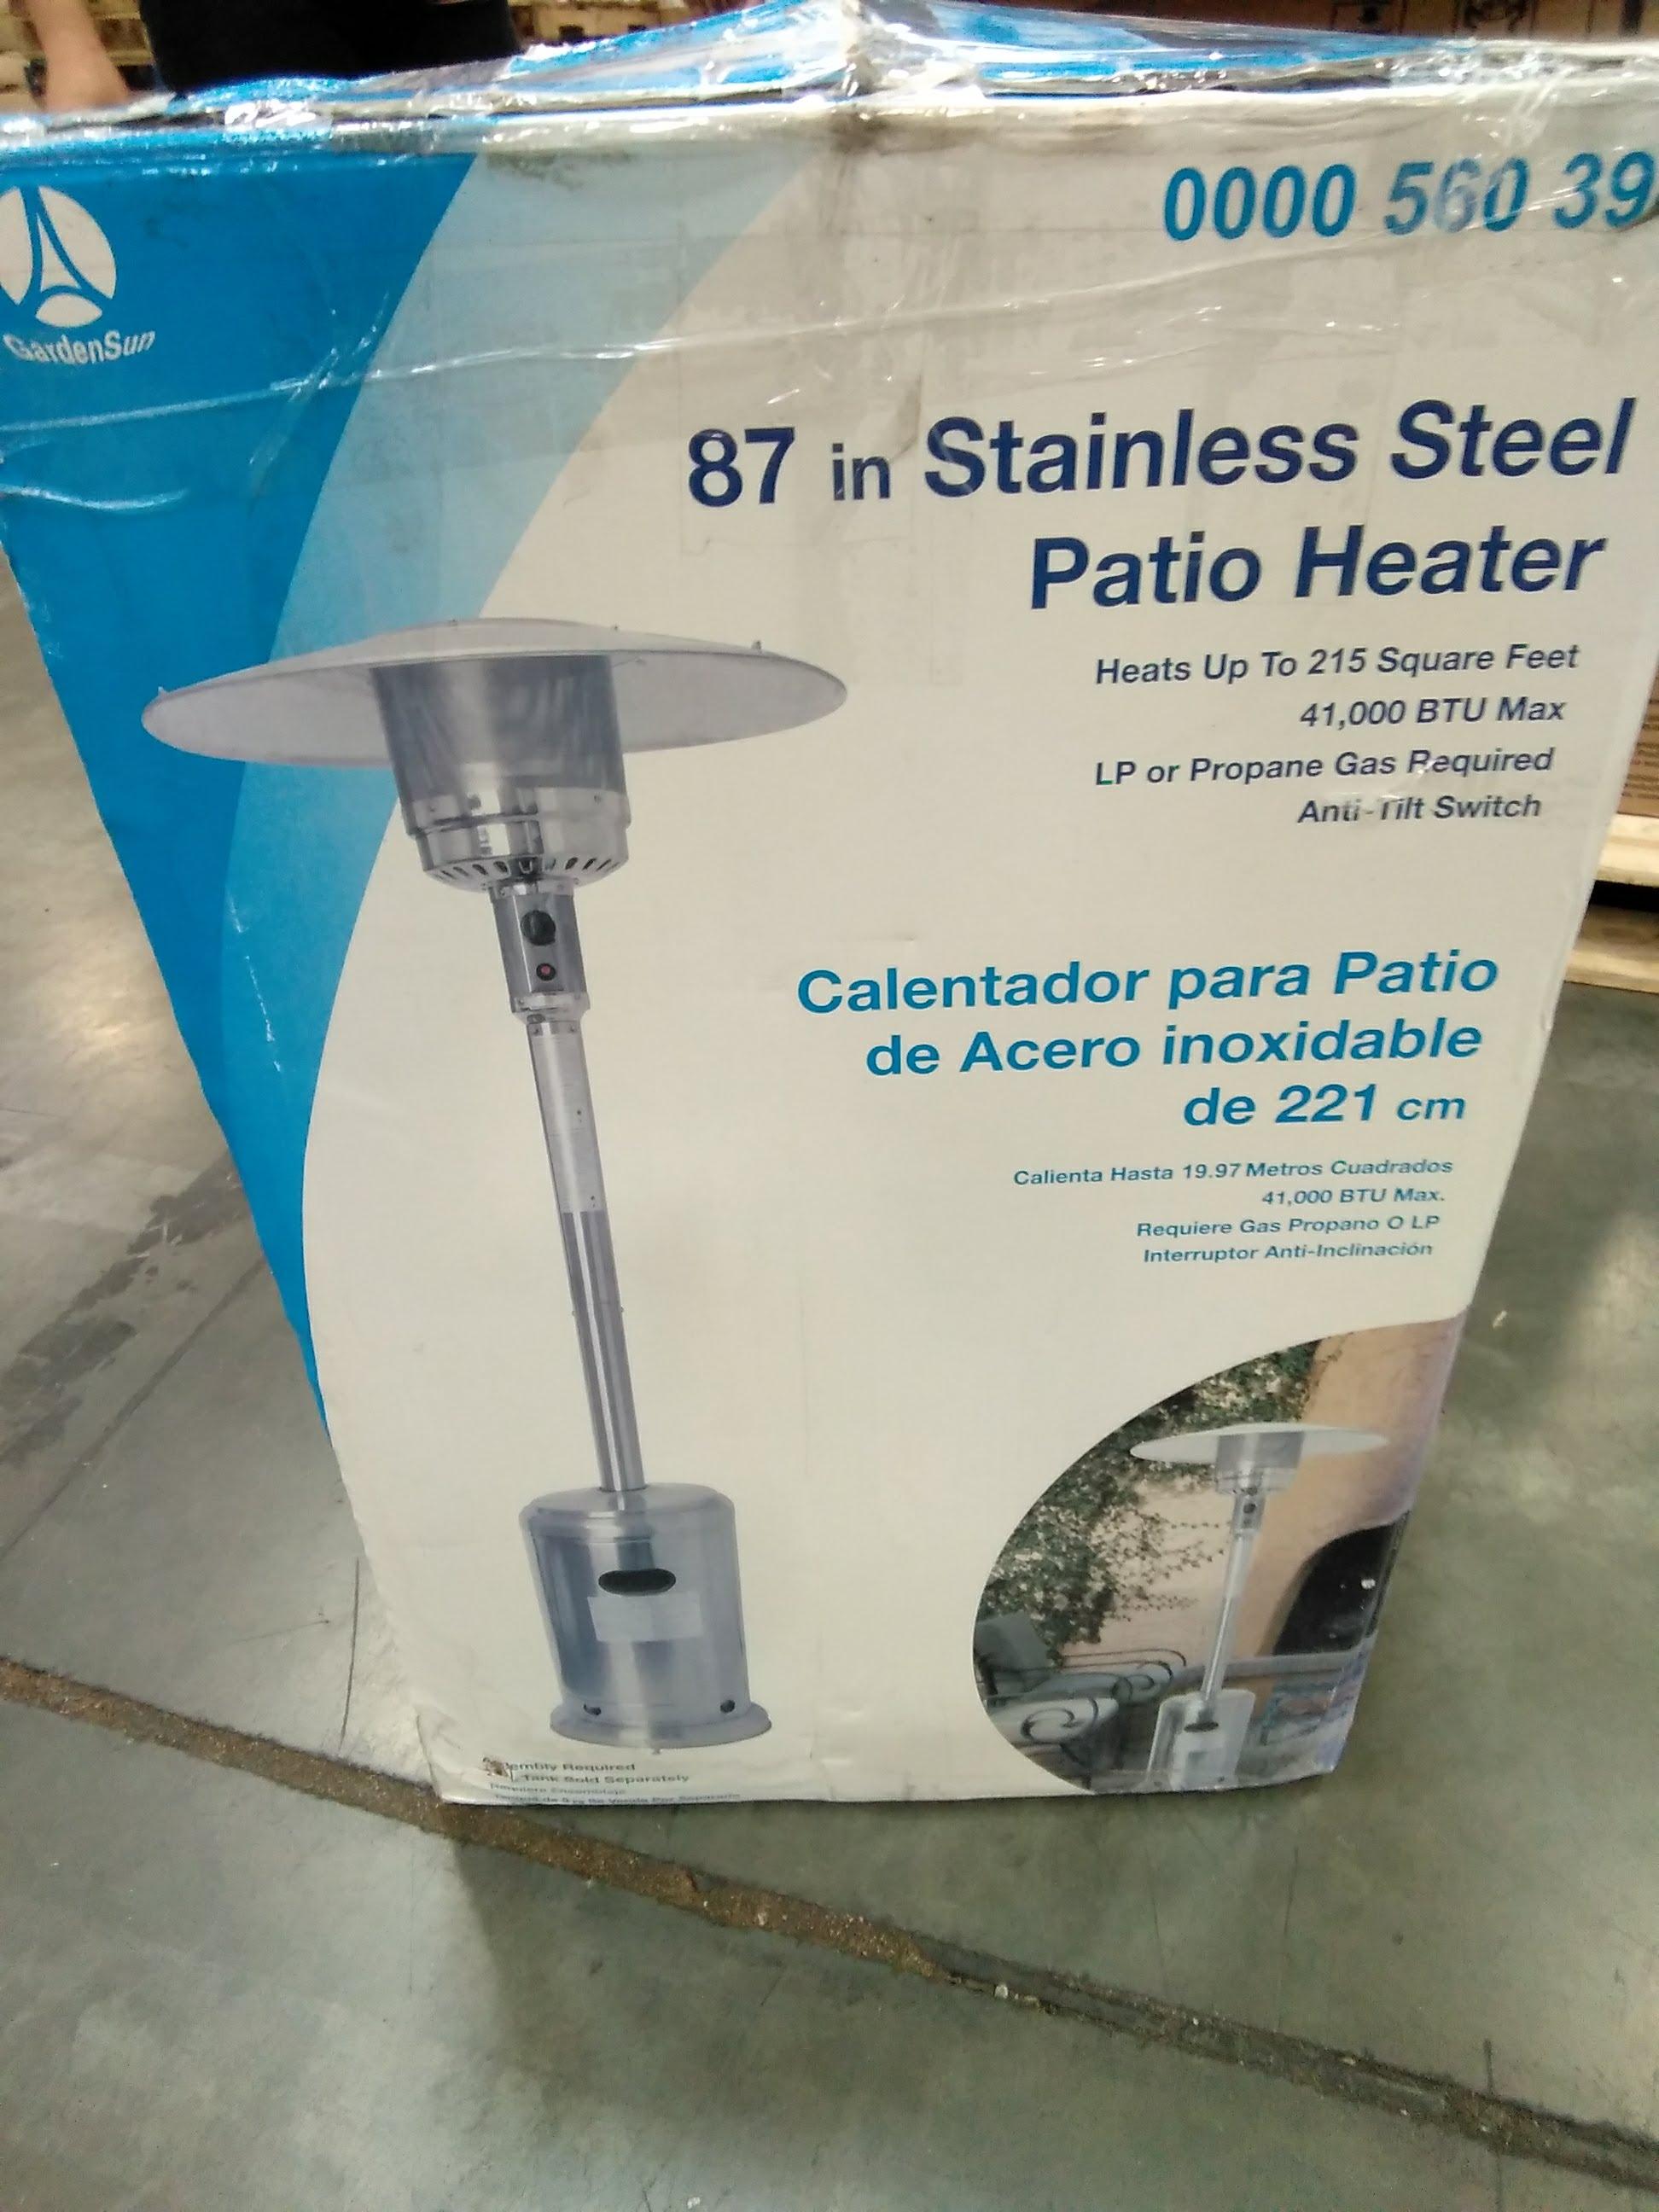 Gardensun 41,000 BTU Stainless Steel Propane Patio Heater. $159.85 ERV